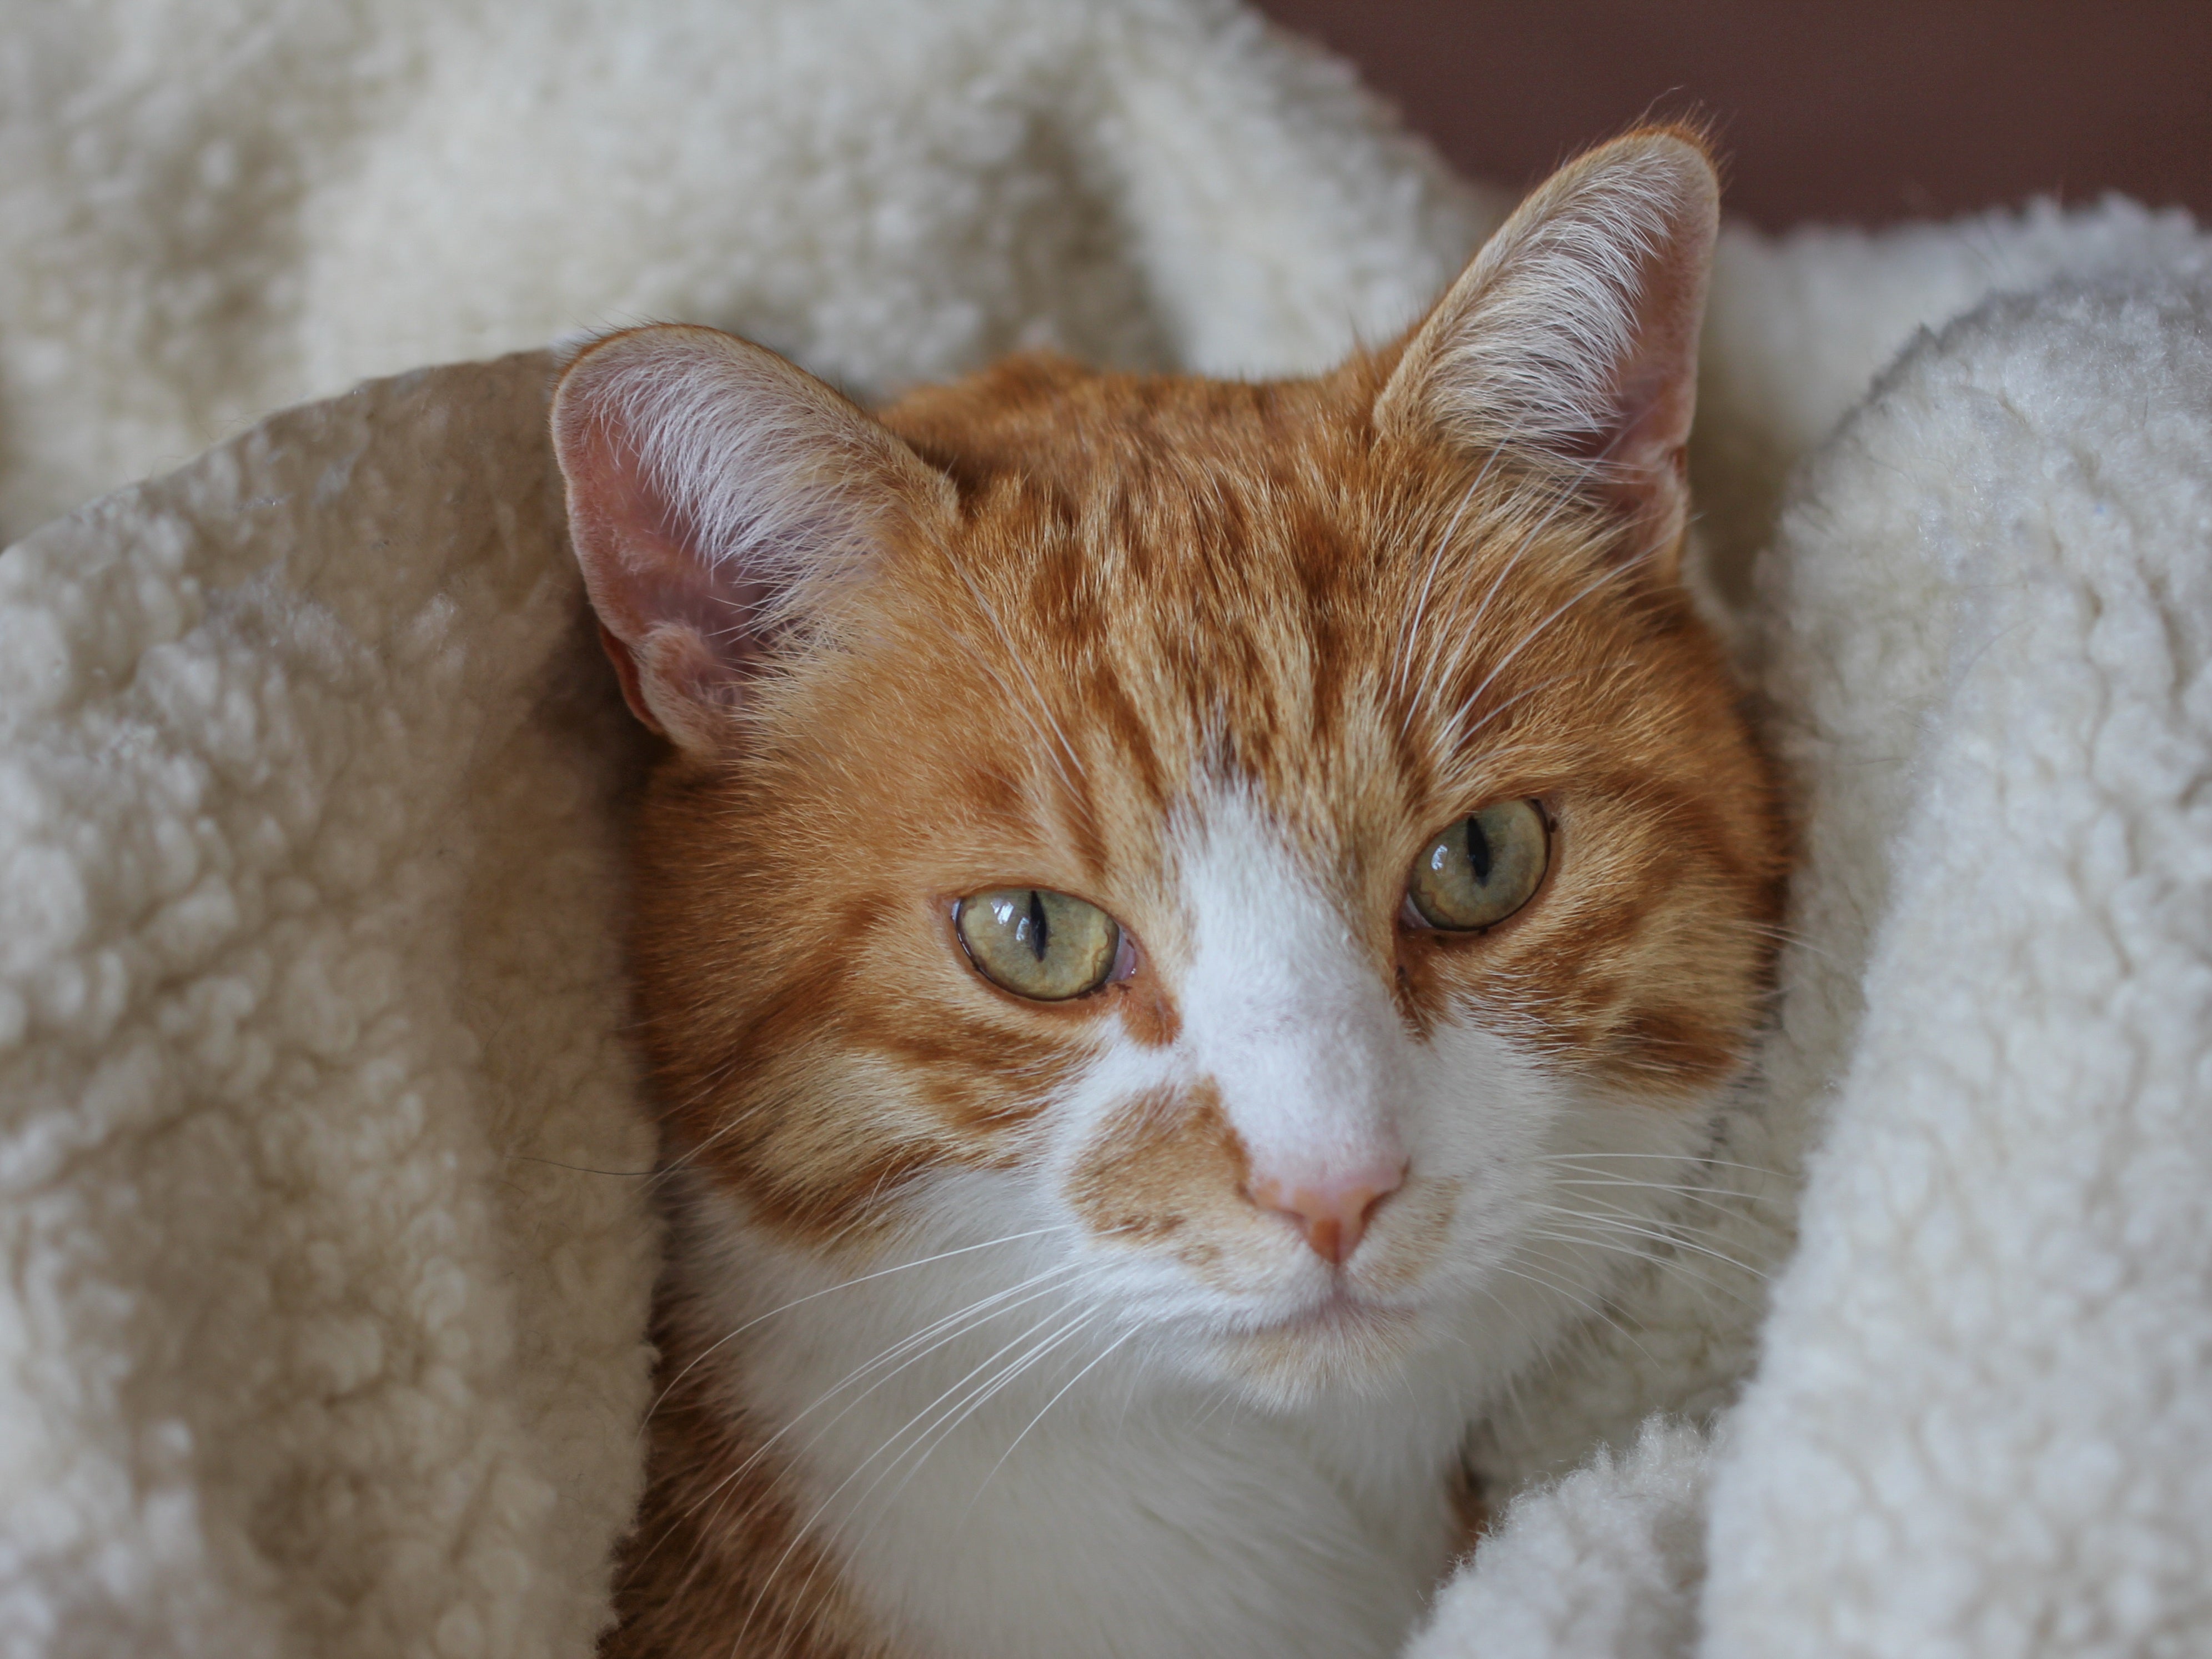 Cat in blankets